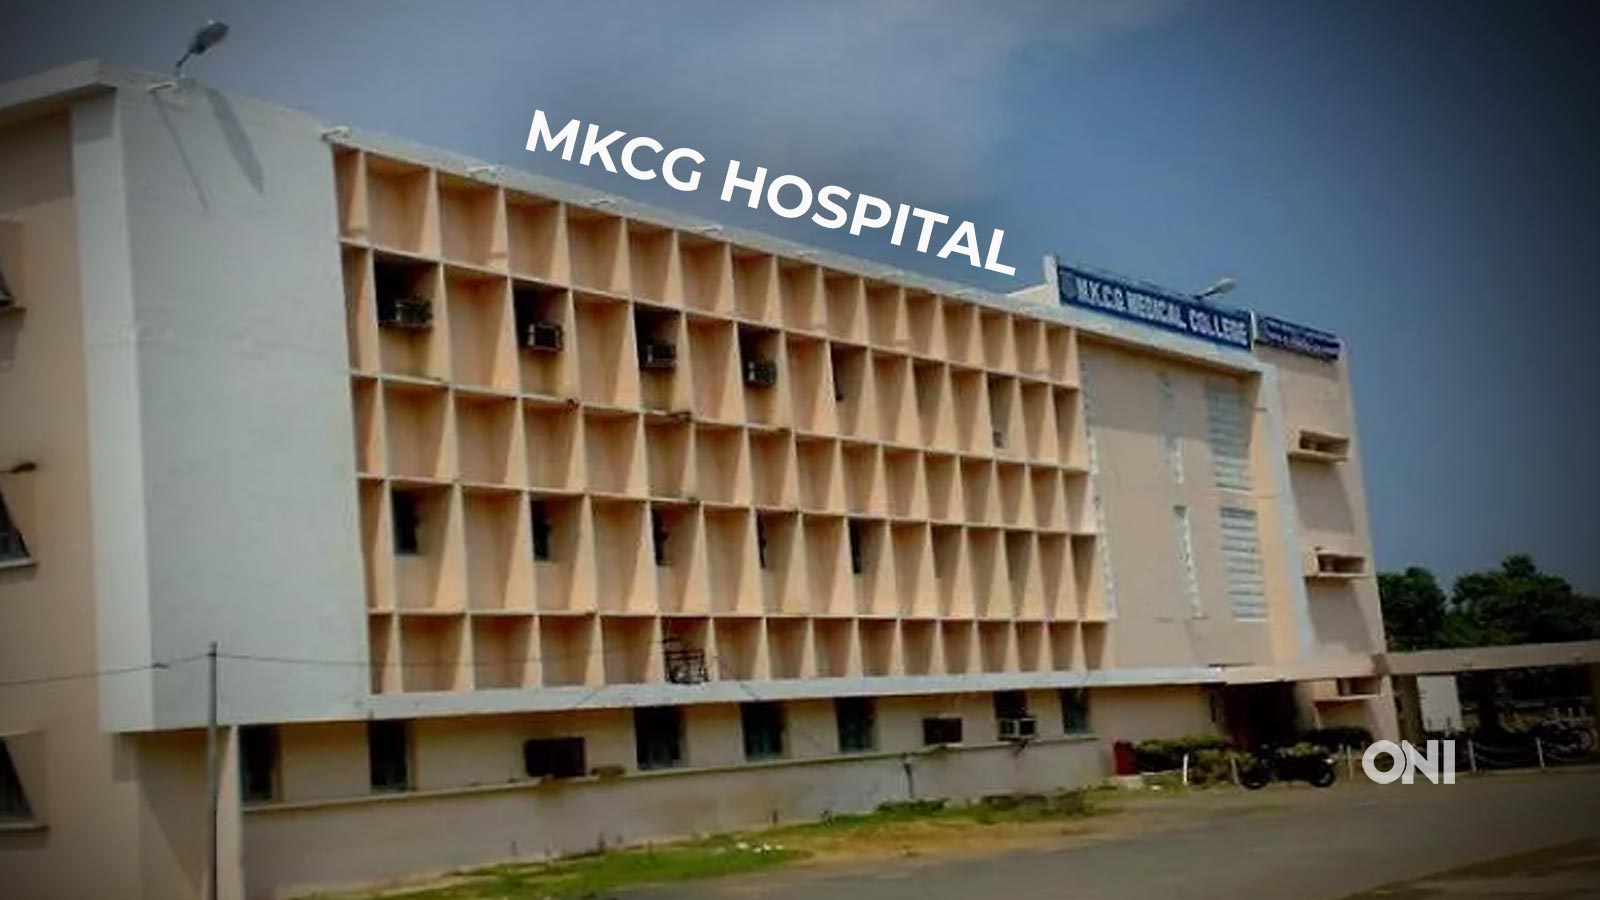 MKCG Hospital Free CT Scan